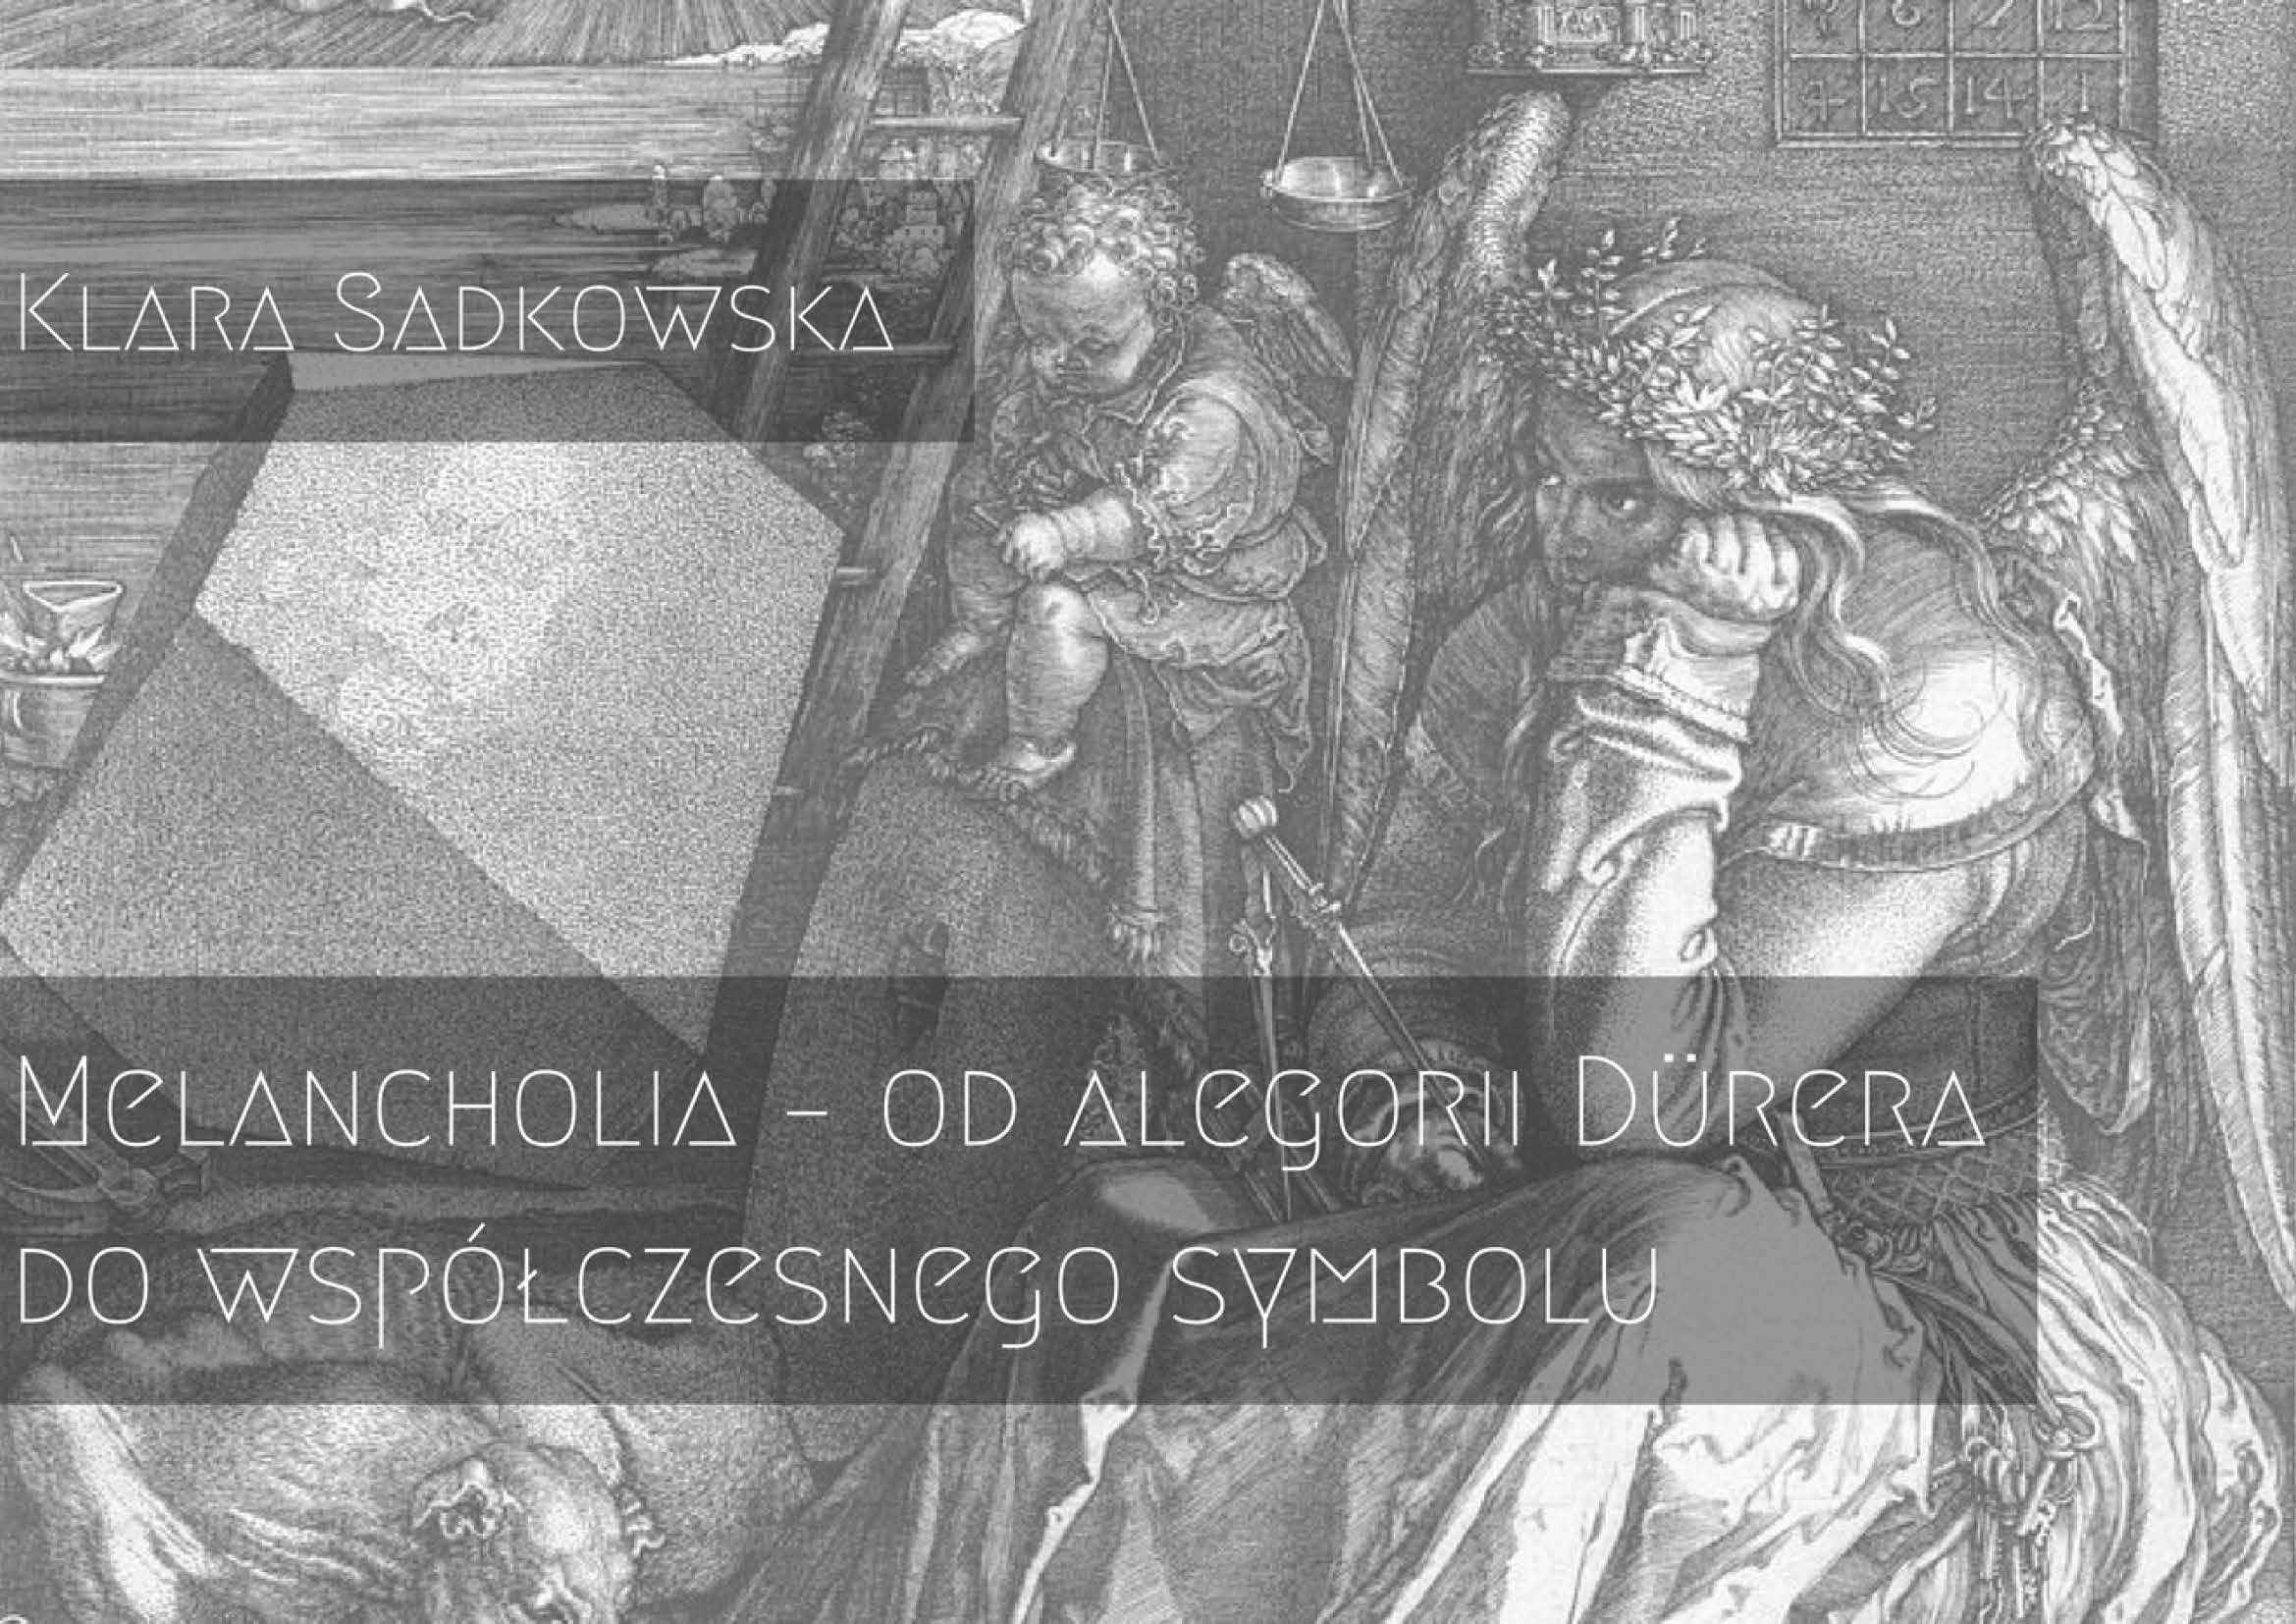 3._klara_sadkowska_-_melancholia_-_od_alegorii_durera_do_wspolczesnego_symbolu